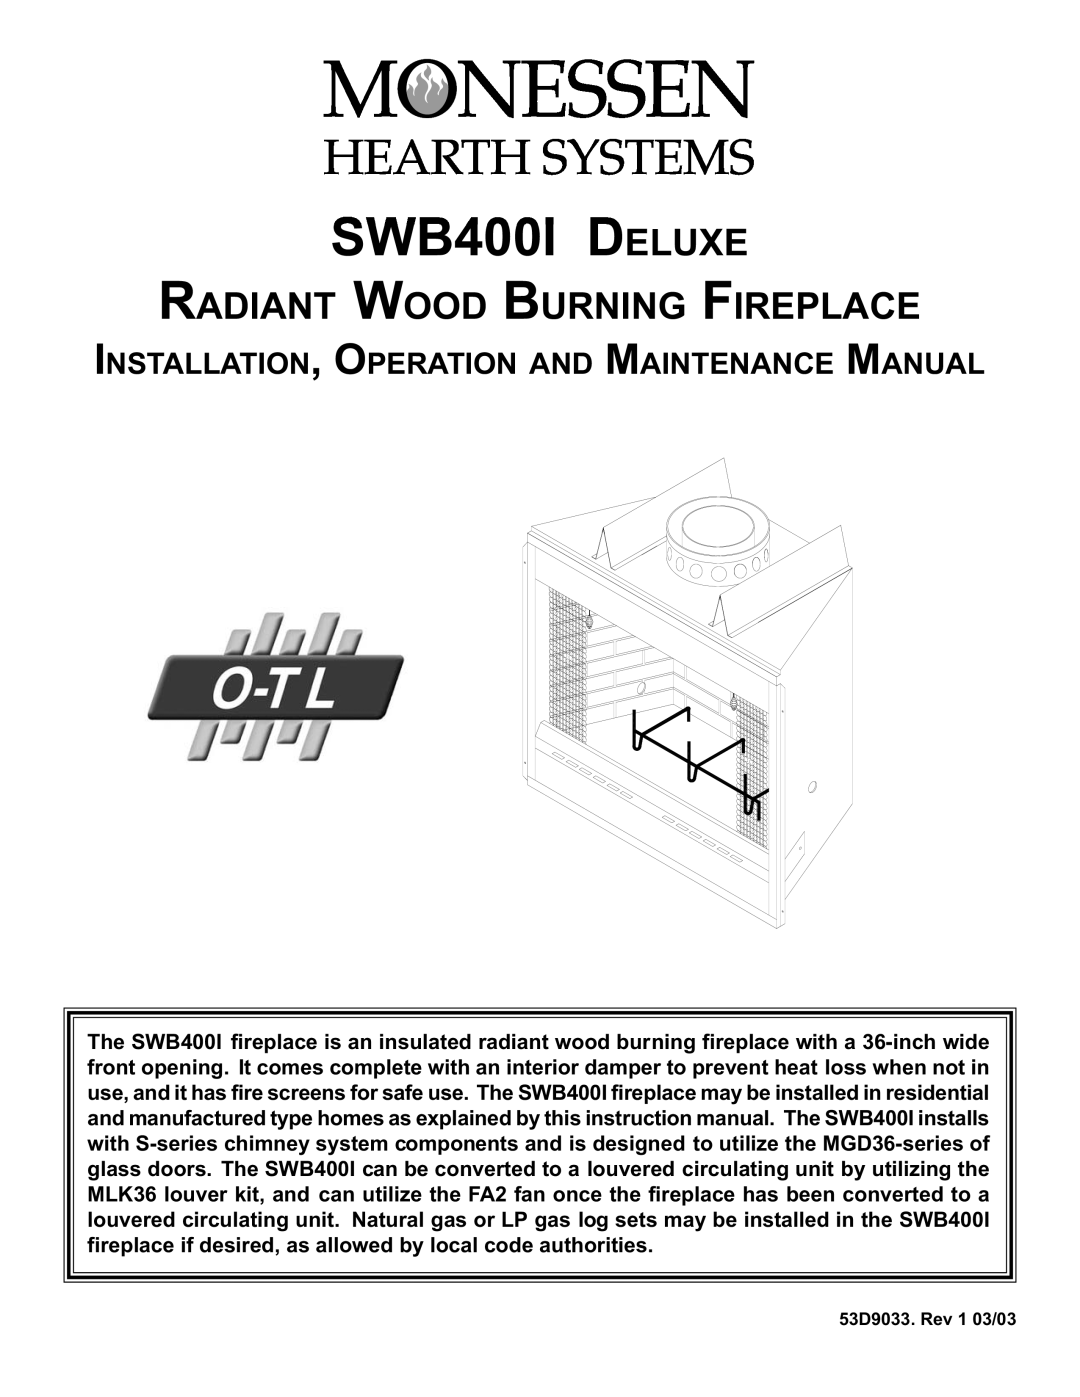 Monessen Hearth instruction manual SWB400I DELUXE, Radiant Wood Burning Fireplace 